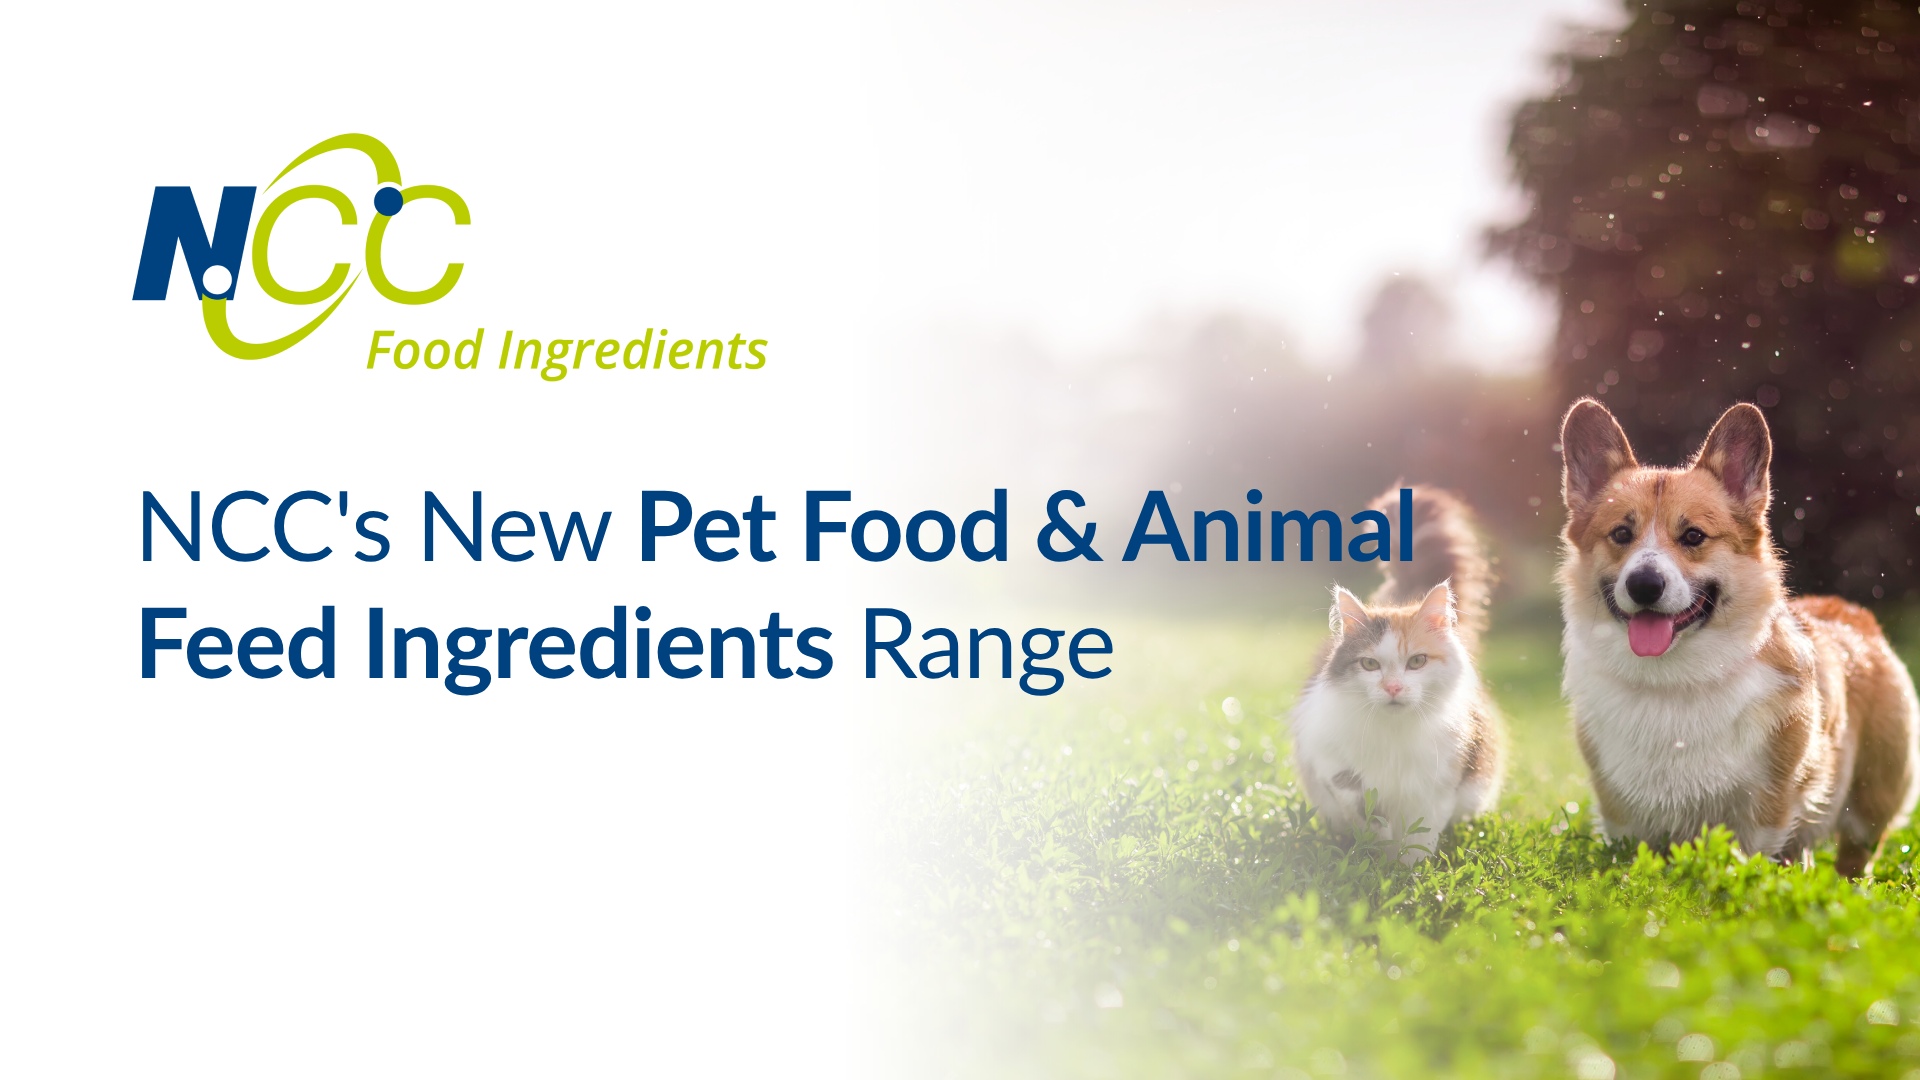 NCC's New Pet Food & Animal Feed Ingredients Range